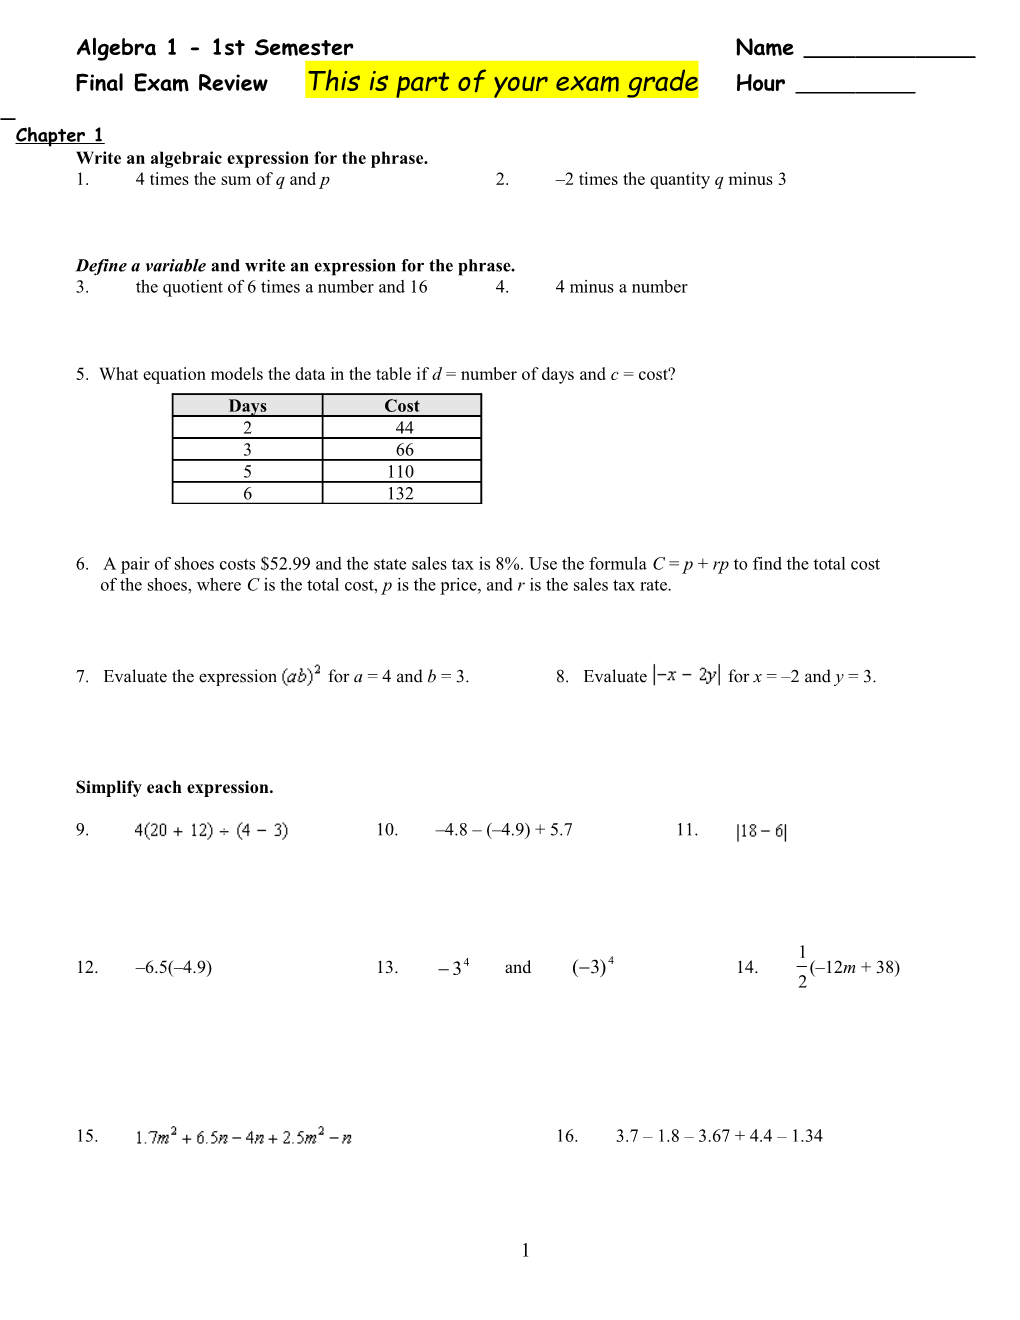 Algebra 1 - Final Exam Review - 1St Semester